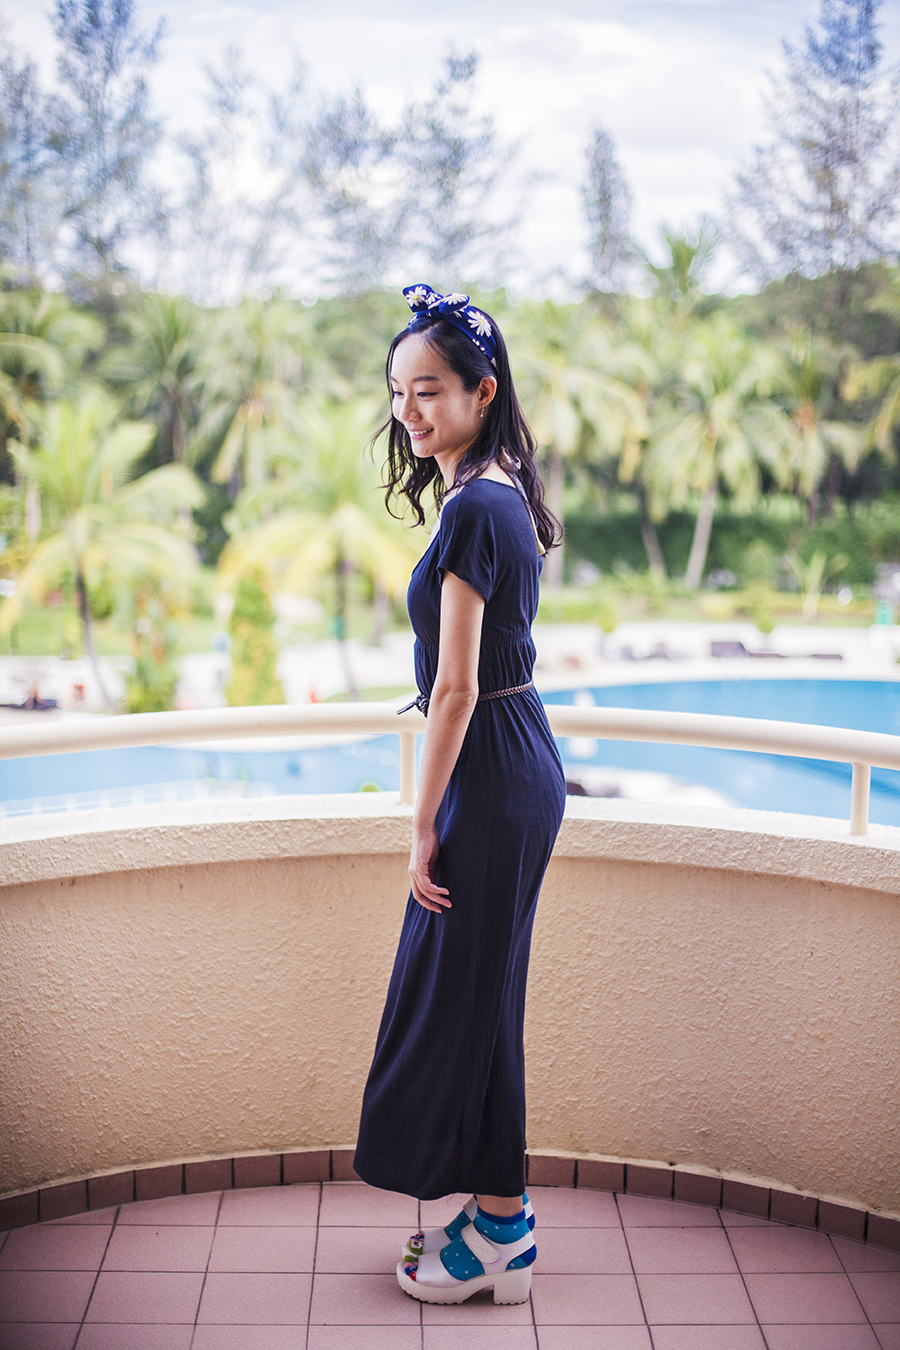 Resort Island Outfit: Forever 21 navy blue maxi dress, Osewaya daisy bunny-ear headband via JRunway, Street Sox llama toe socks, Taobao white platform sandals.